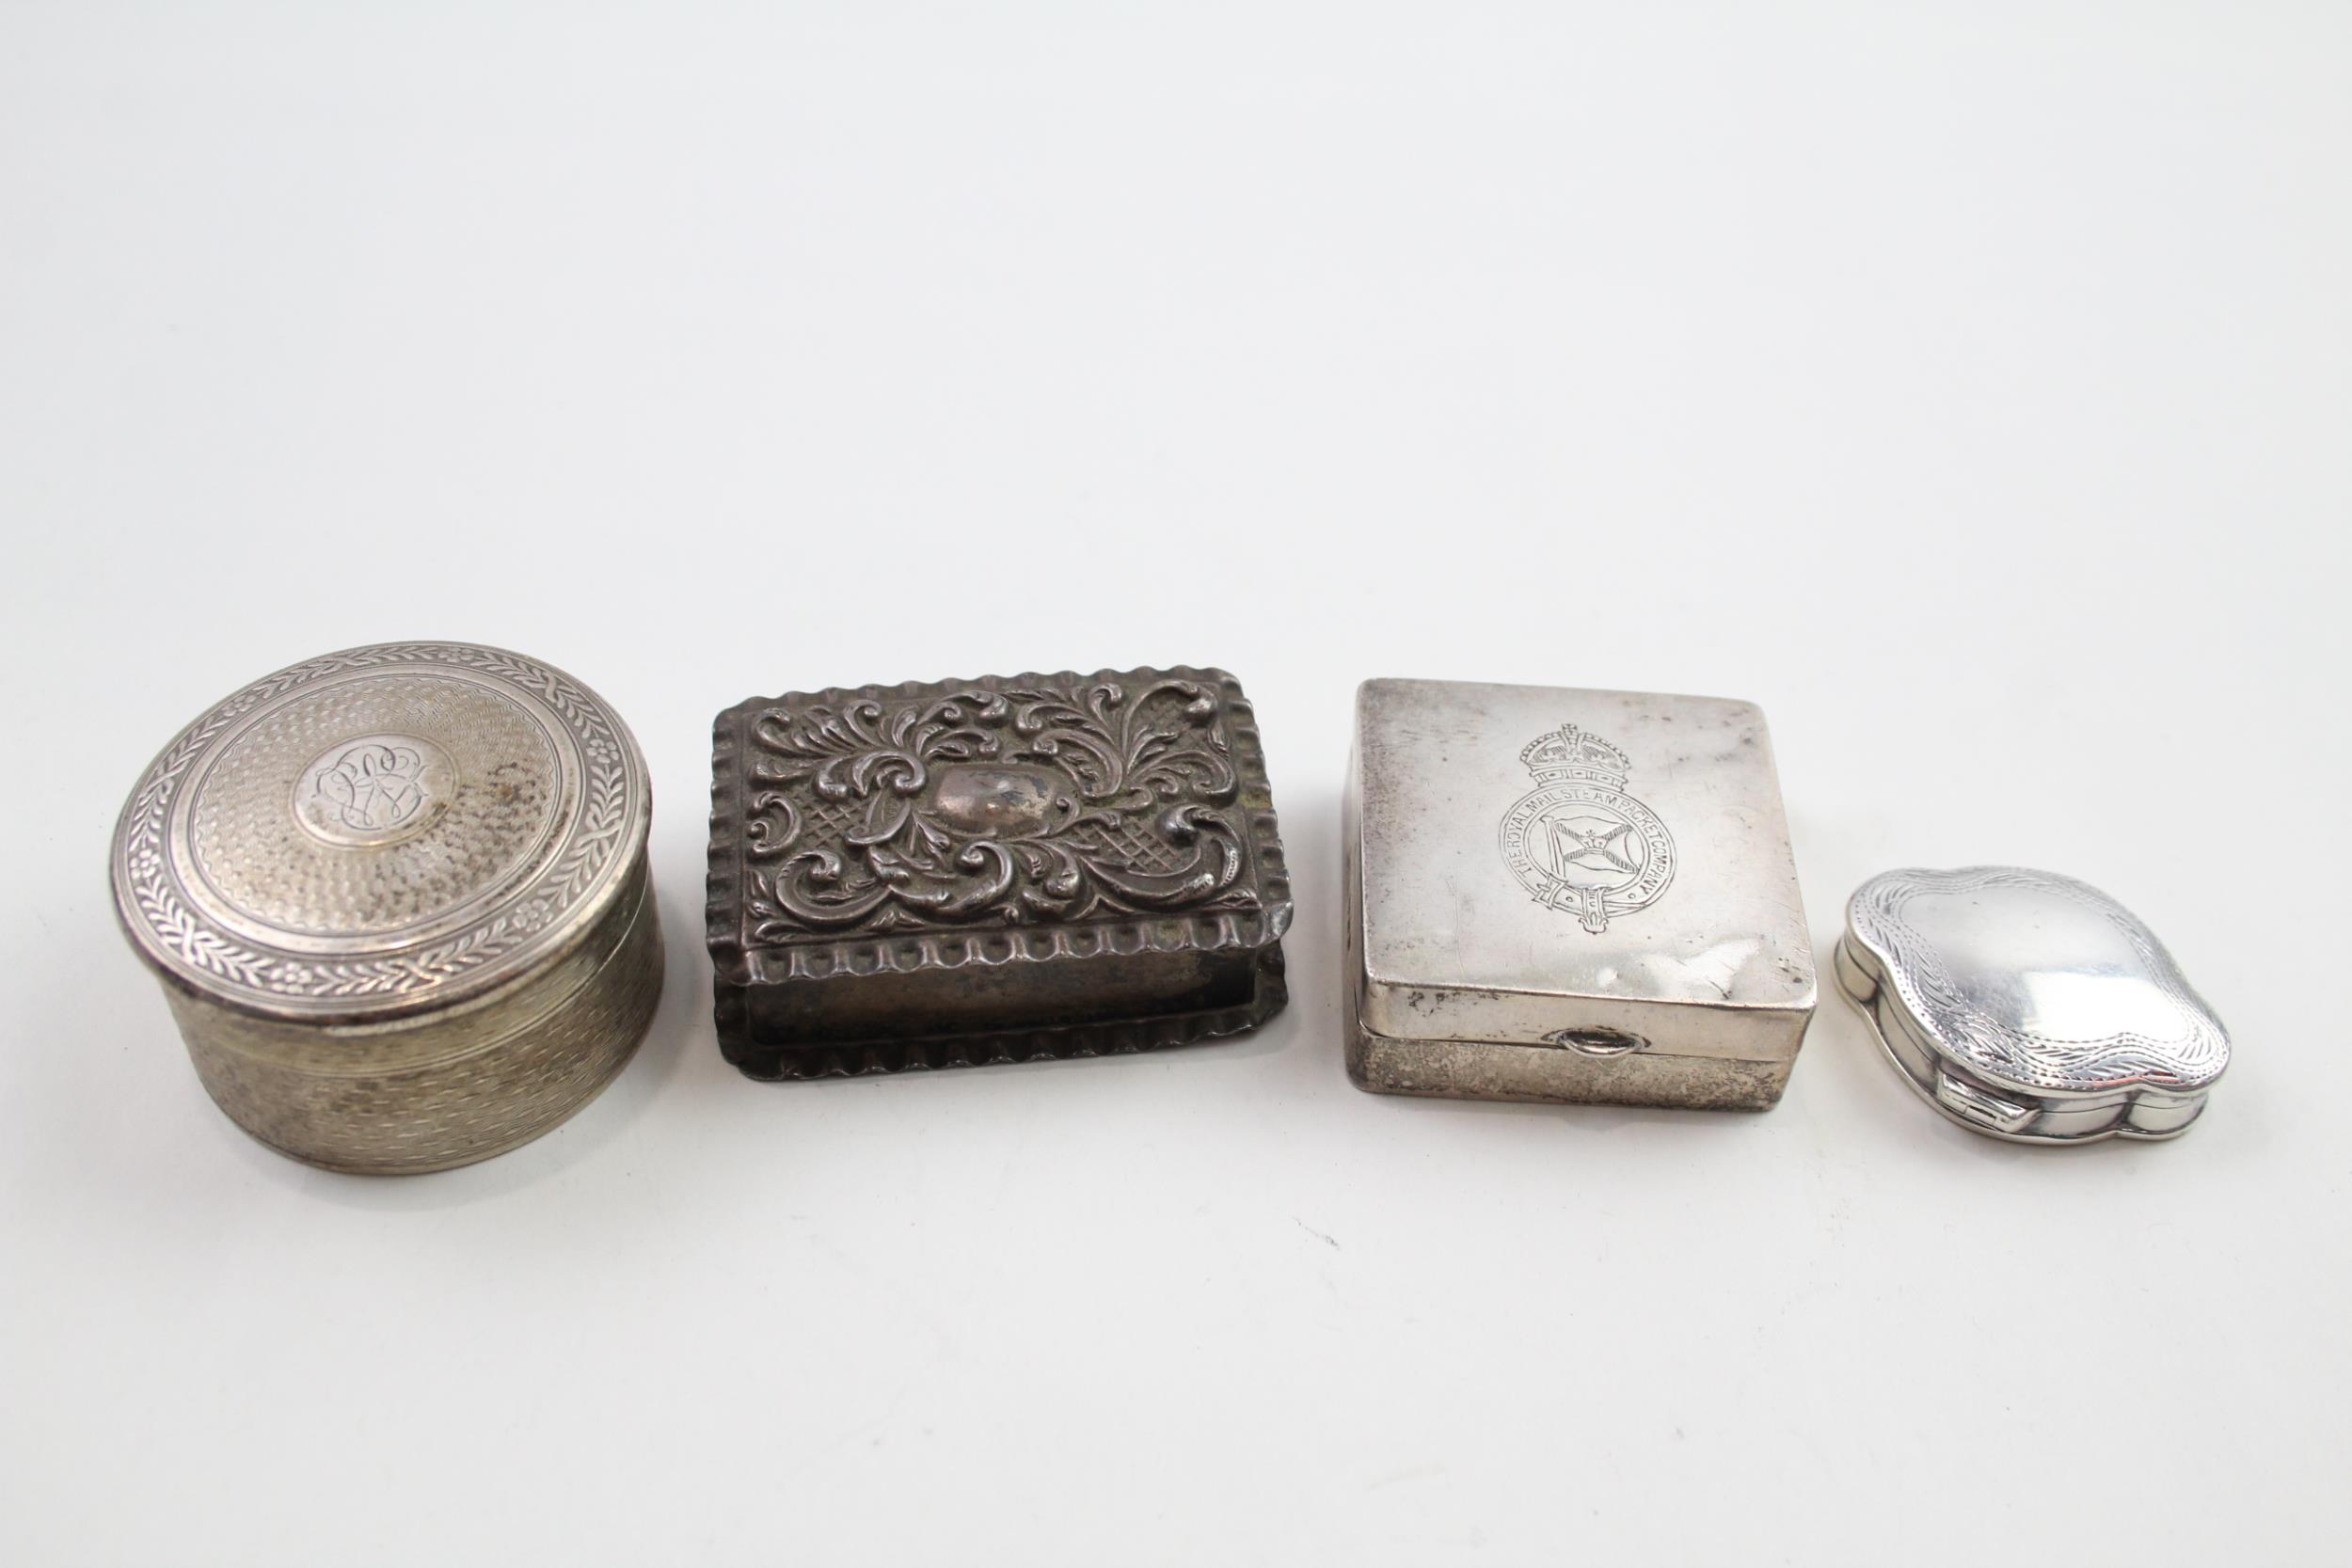 4 x Antique / Vintage .925 Sterling Silver Pill / Trinket Boxes (97g) - In antique / vintage